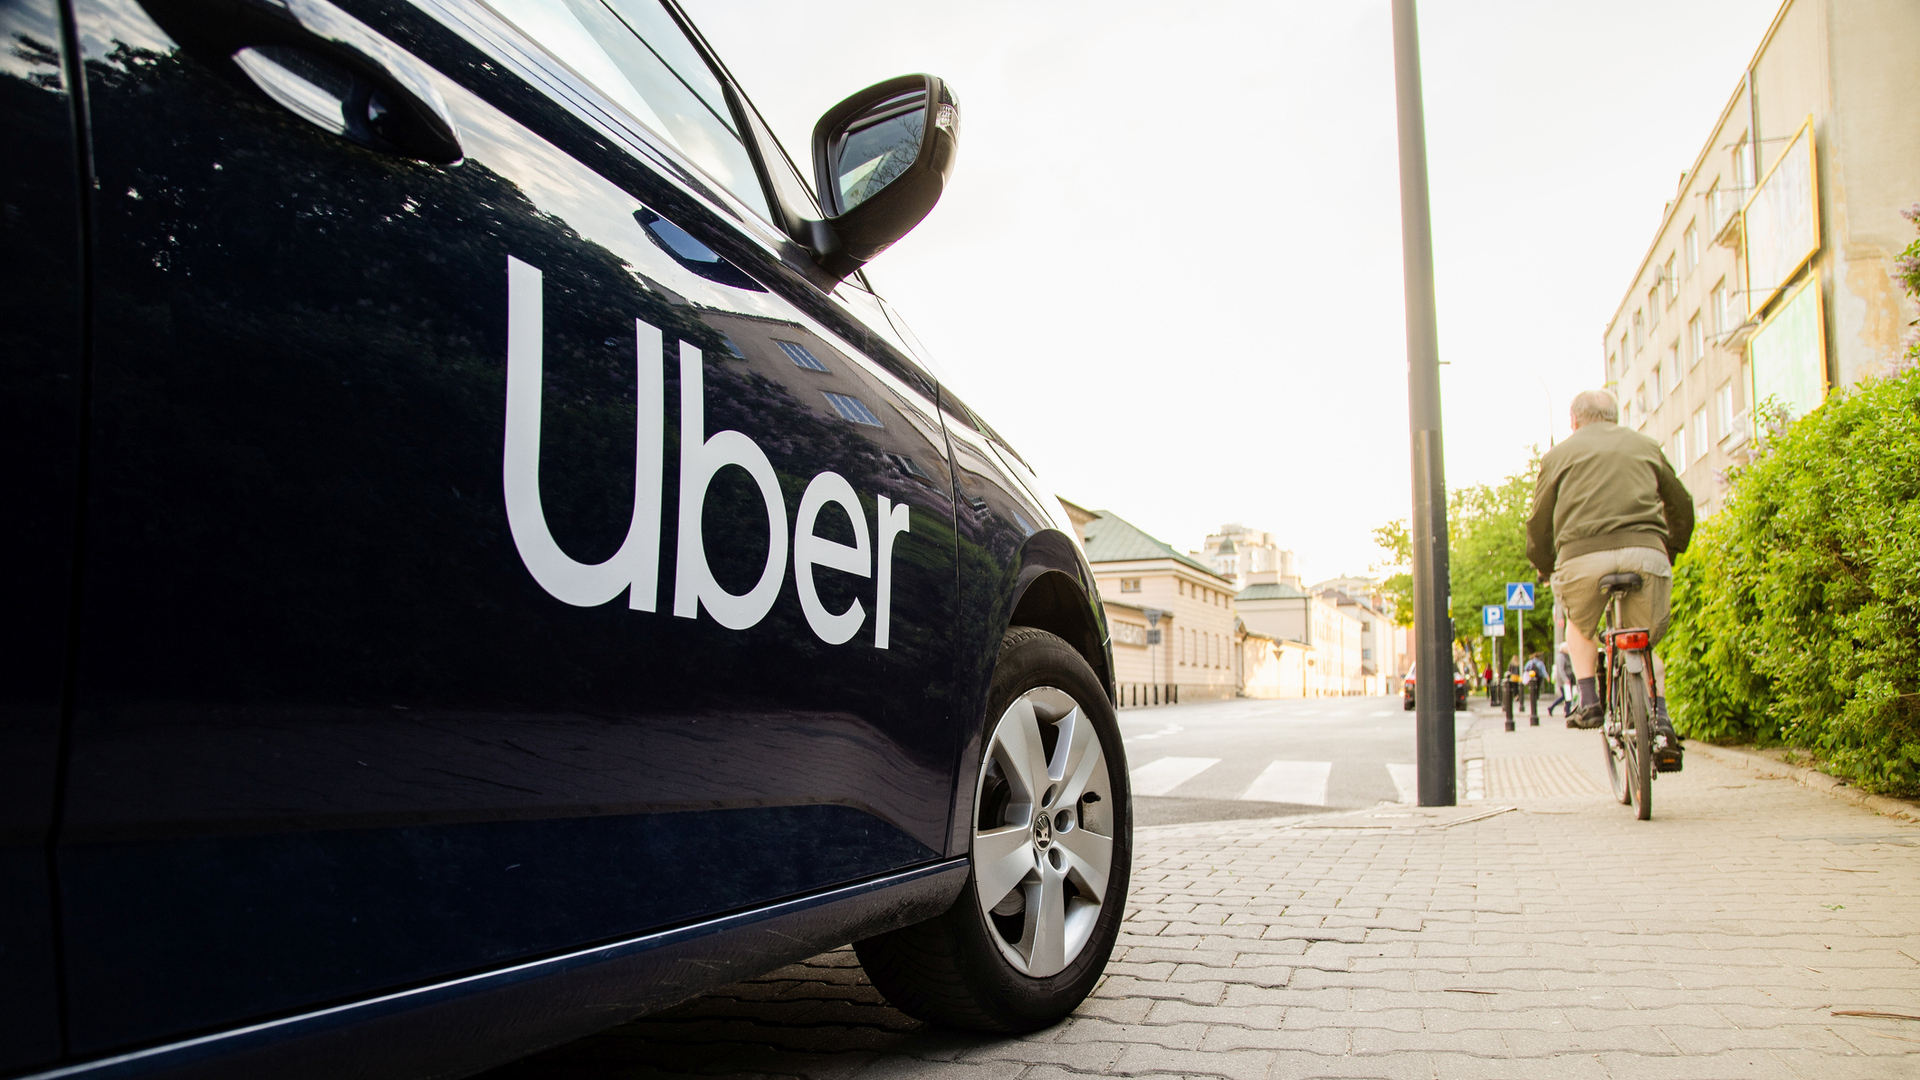 overrated companies - uber taxi edinburgh - Uber